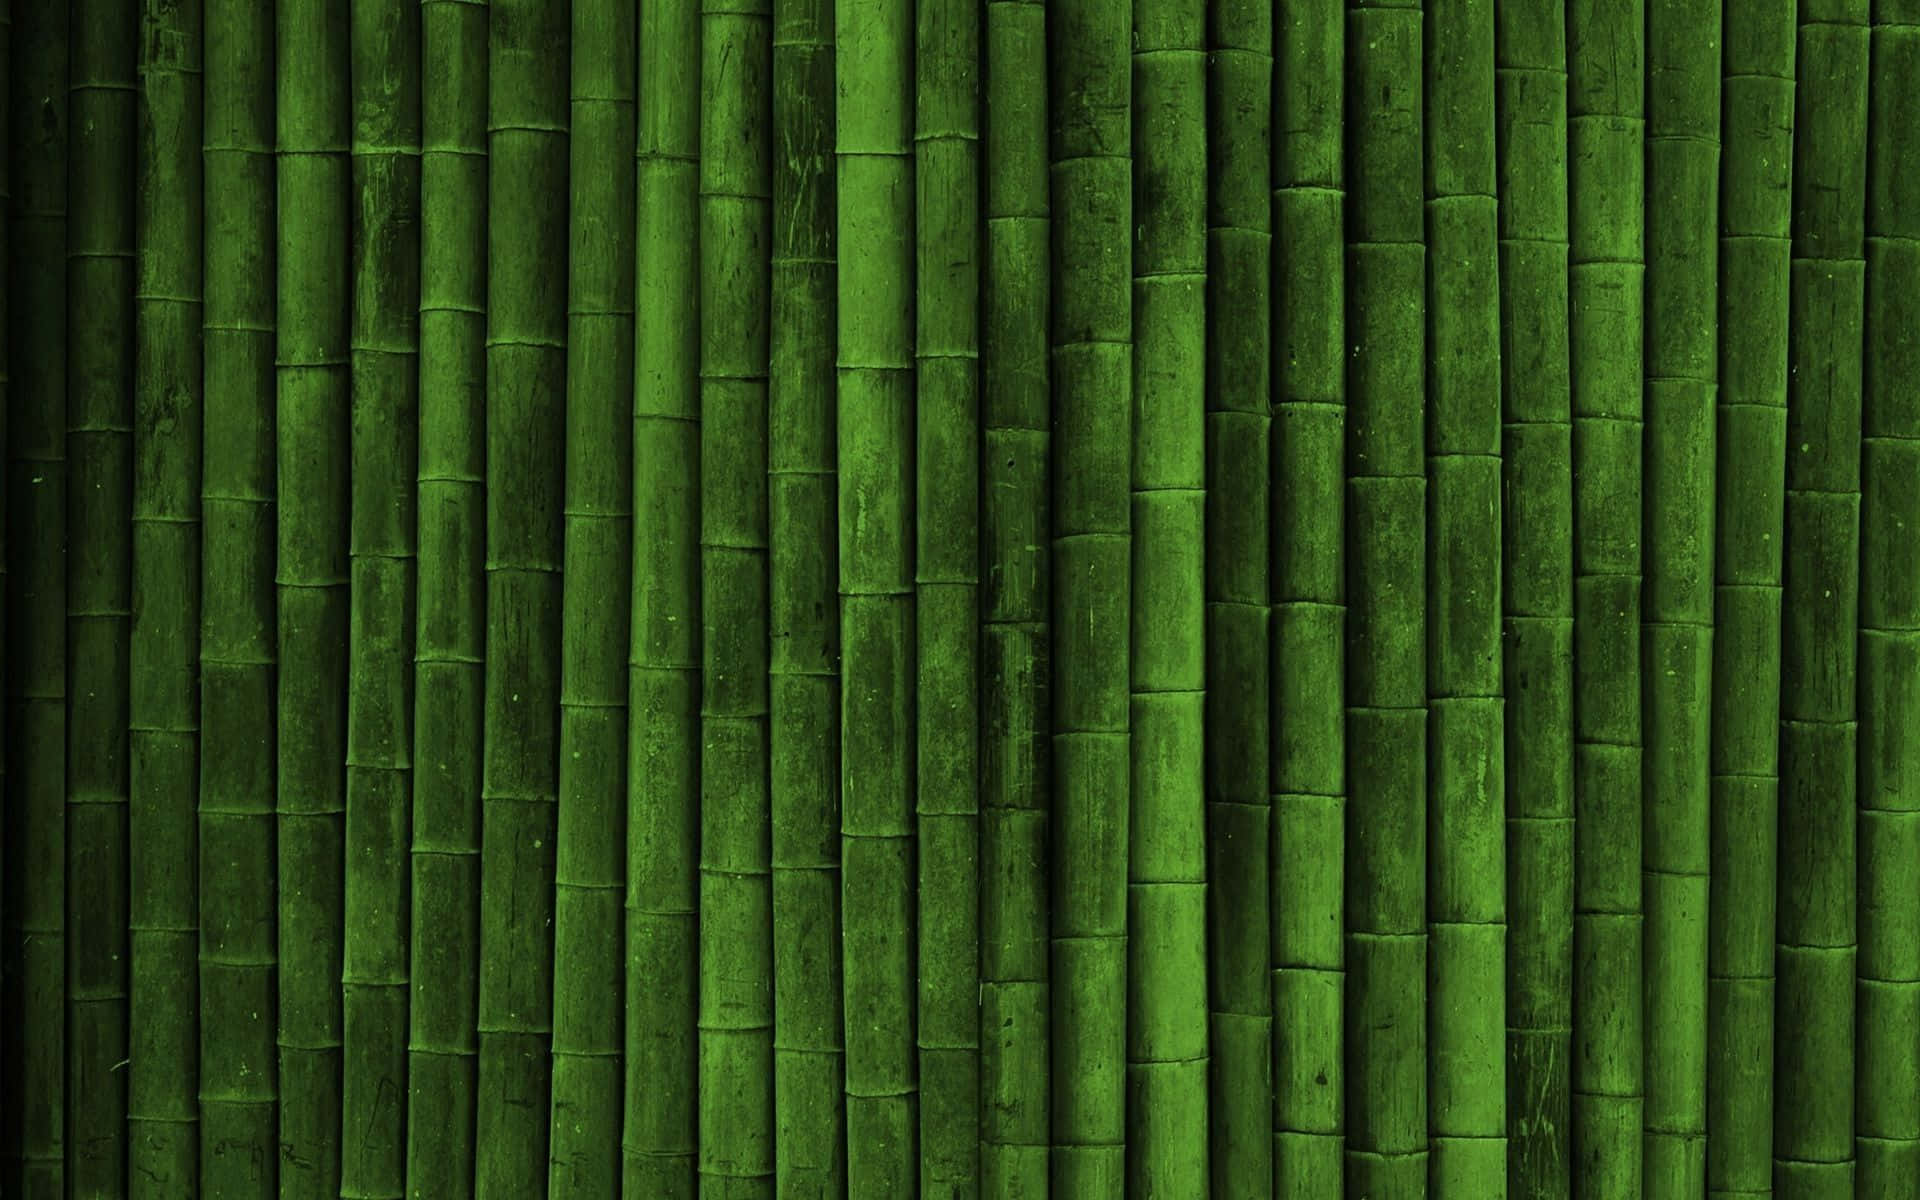 Grönoch Frodig Bambuskog I Naturen. Wallpaper